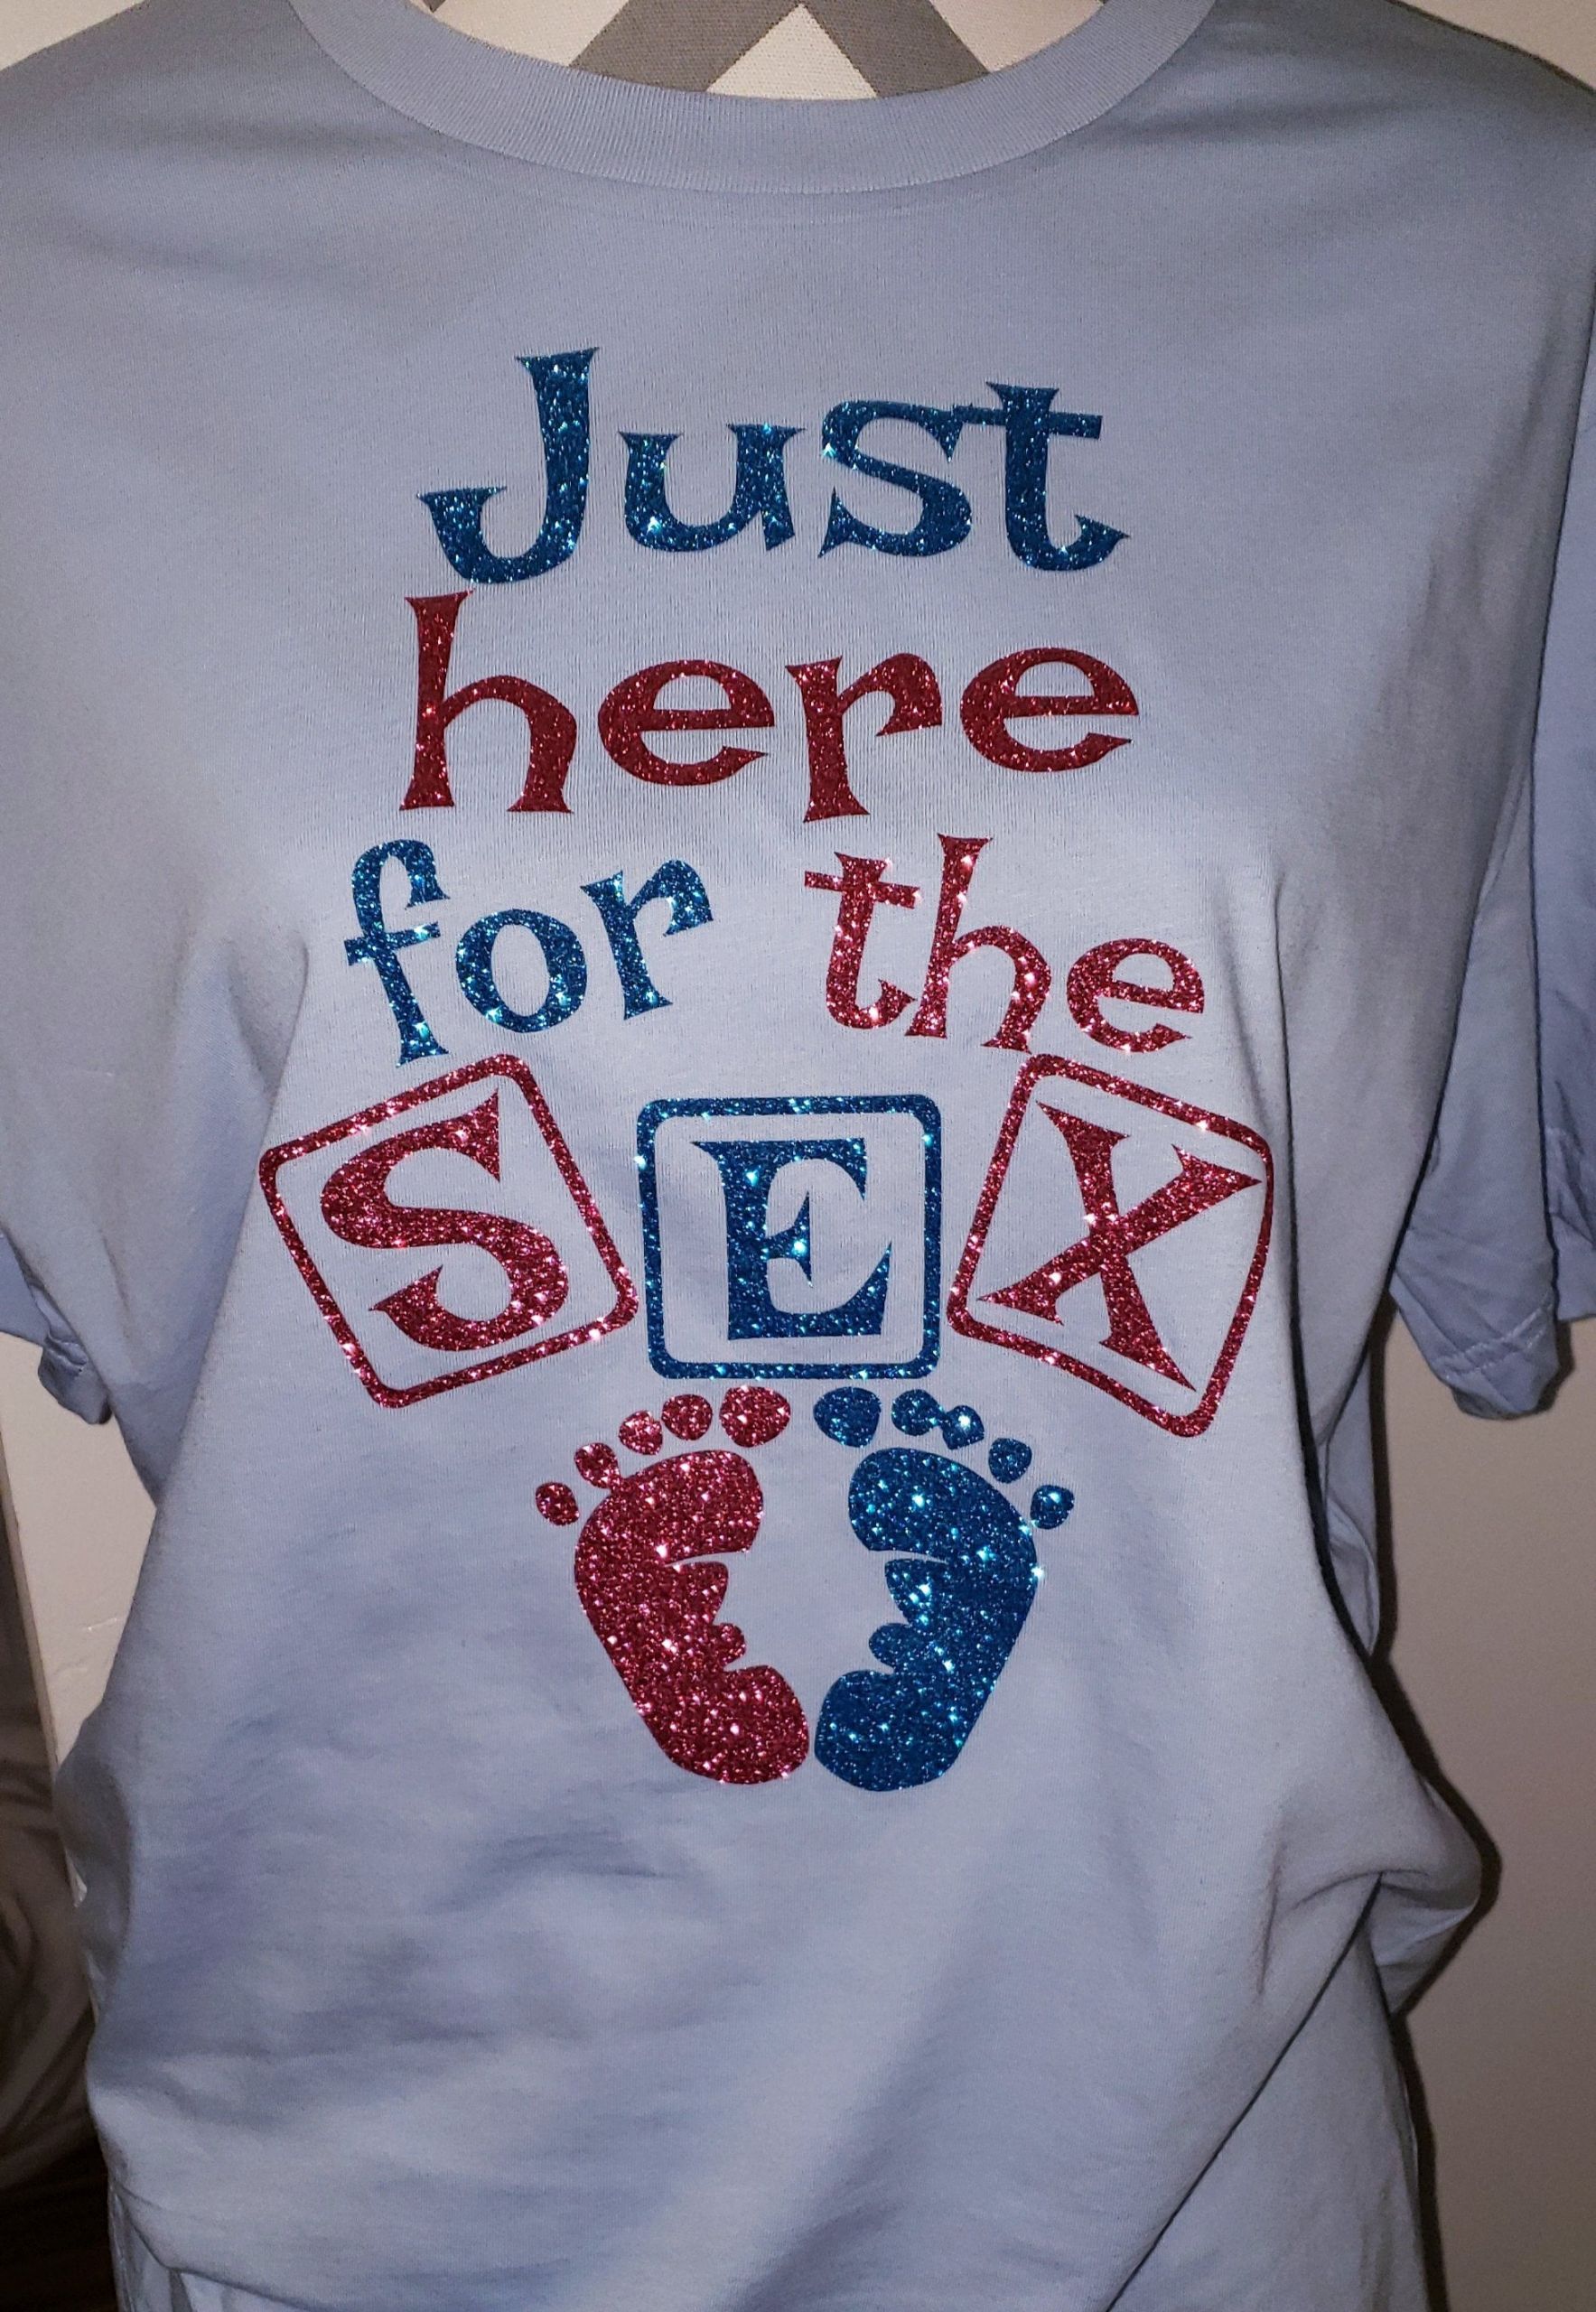 Gender Reveal Party Shirt Ideas
 Gender reveal shirt gender reveal party ideas sweatshirt